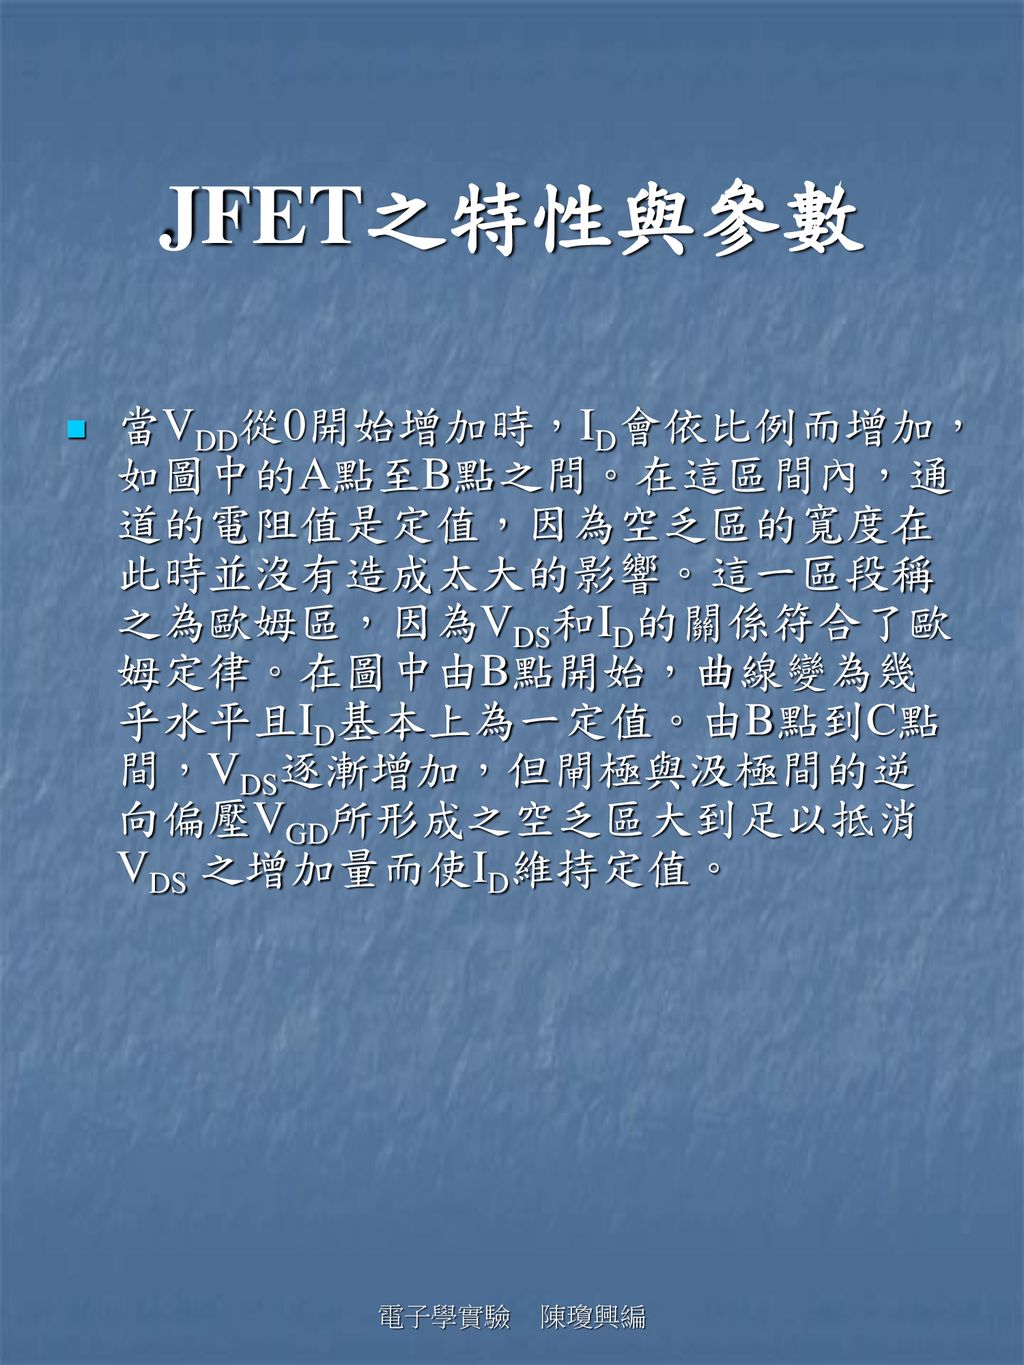 JFET之特性與參數